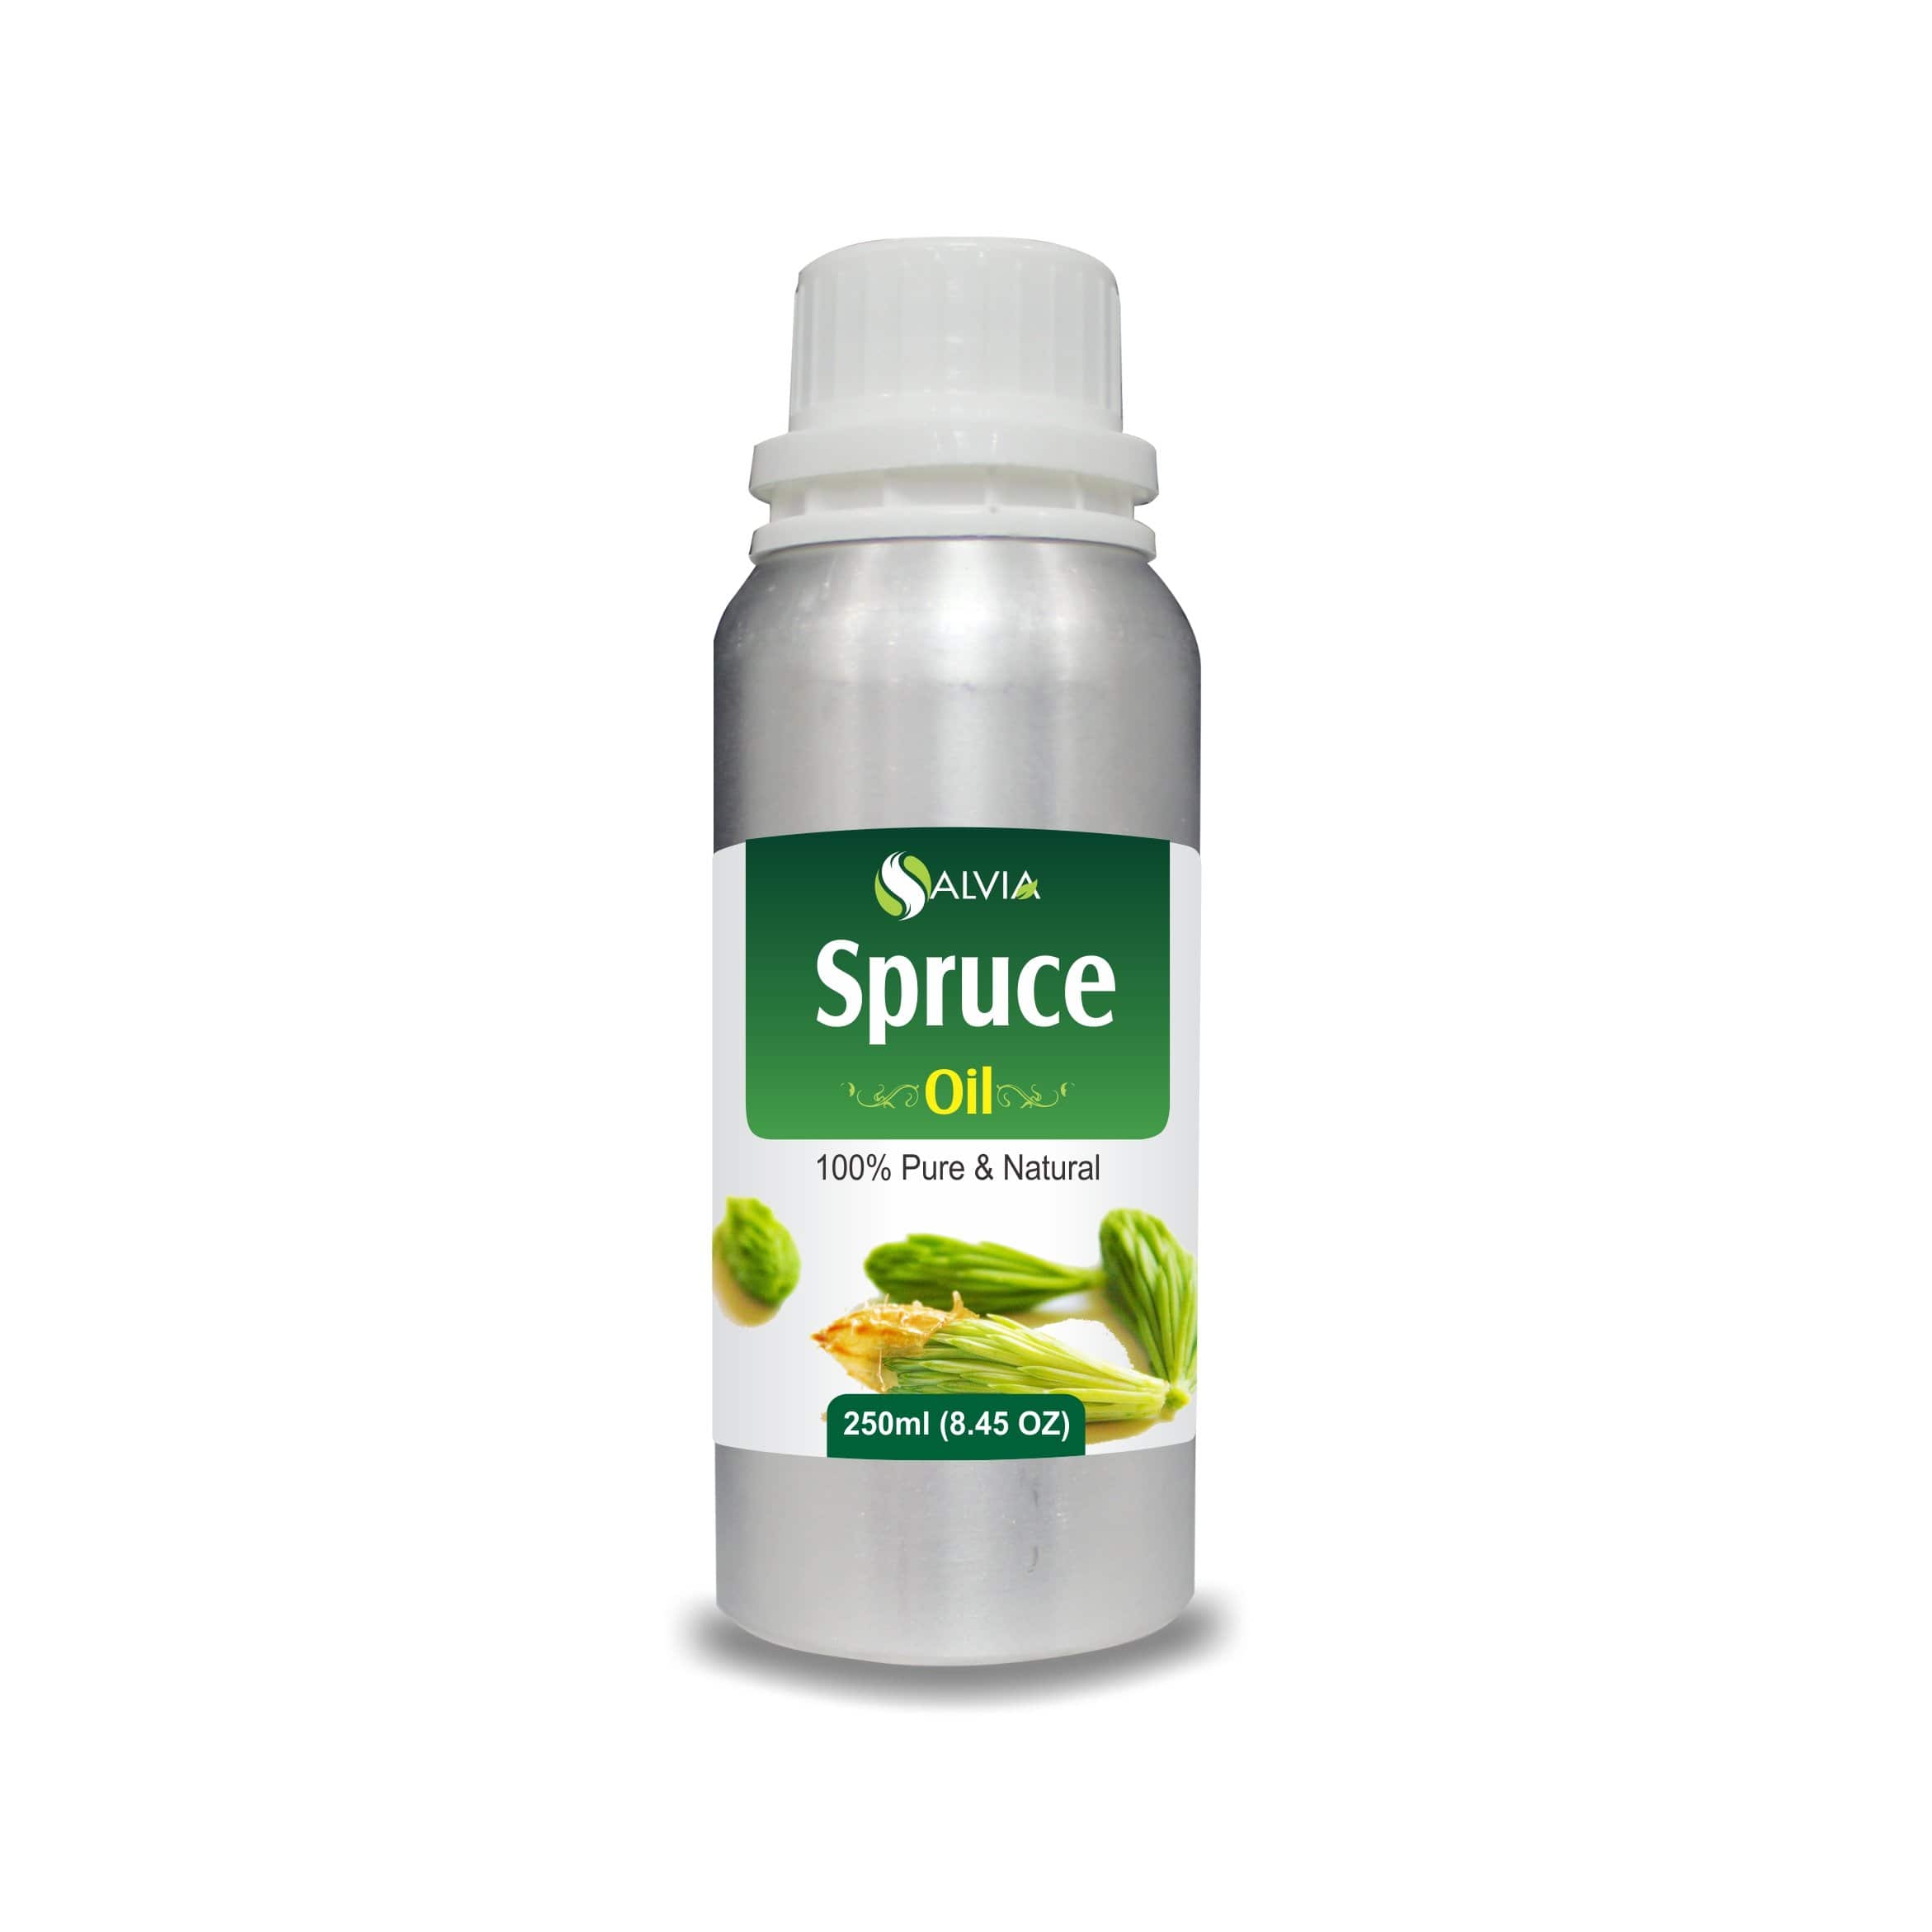 spruce oil for skin